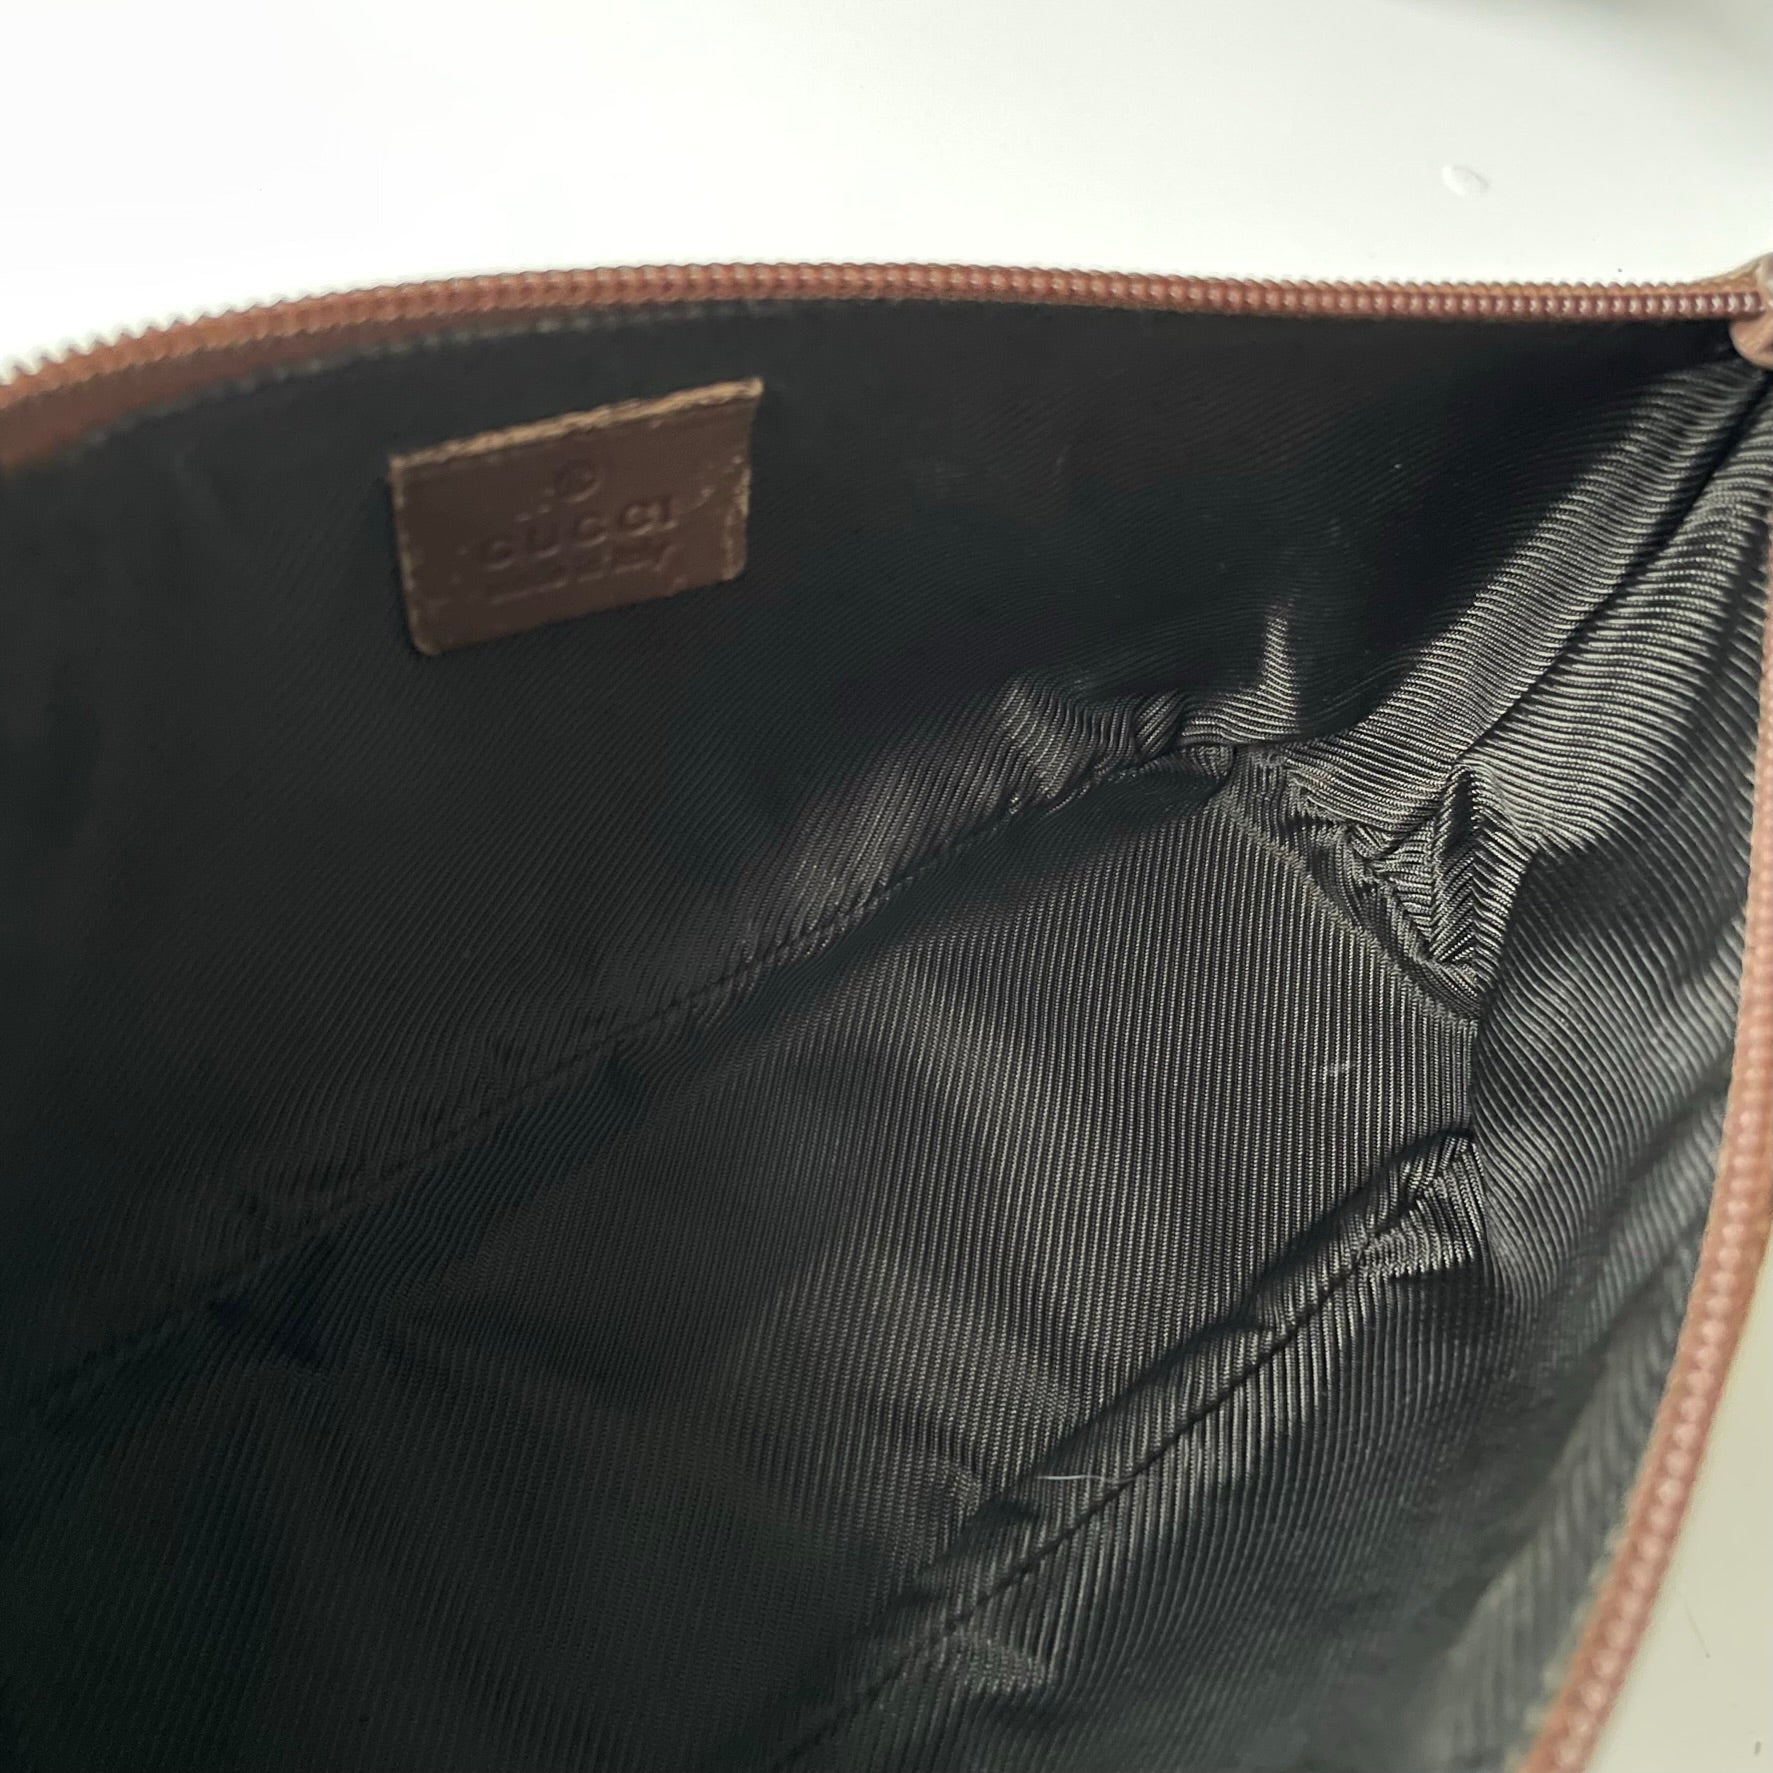 Gucci Boat Pochette - ShopStyle Shoulder Bags